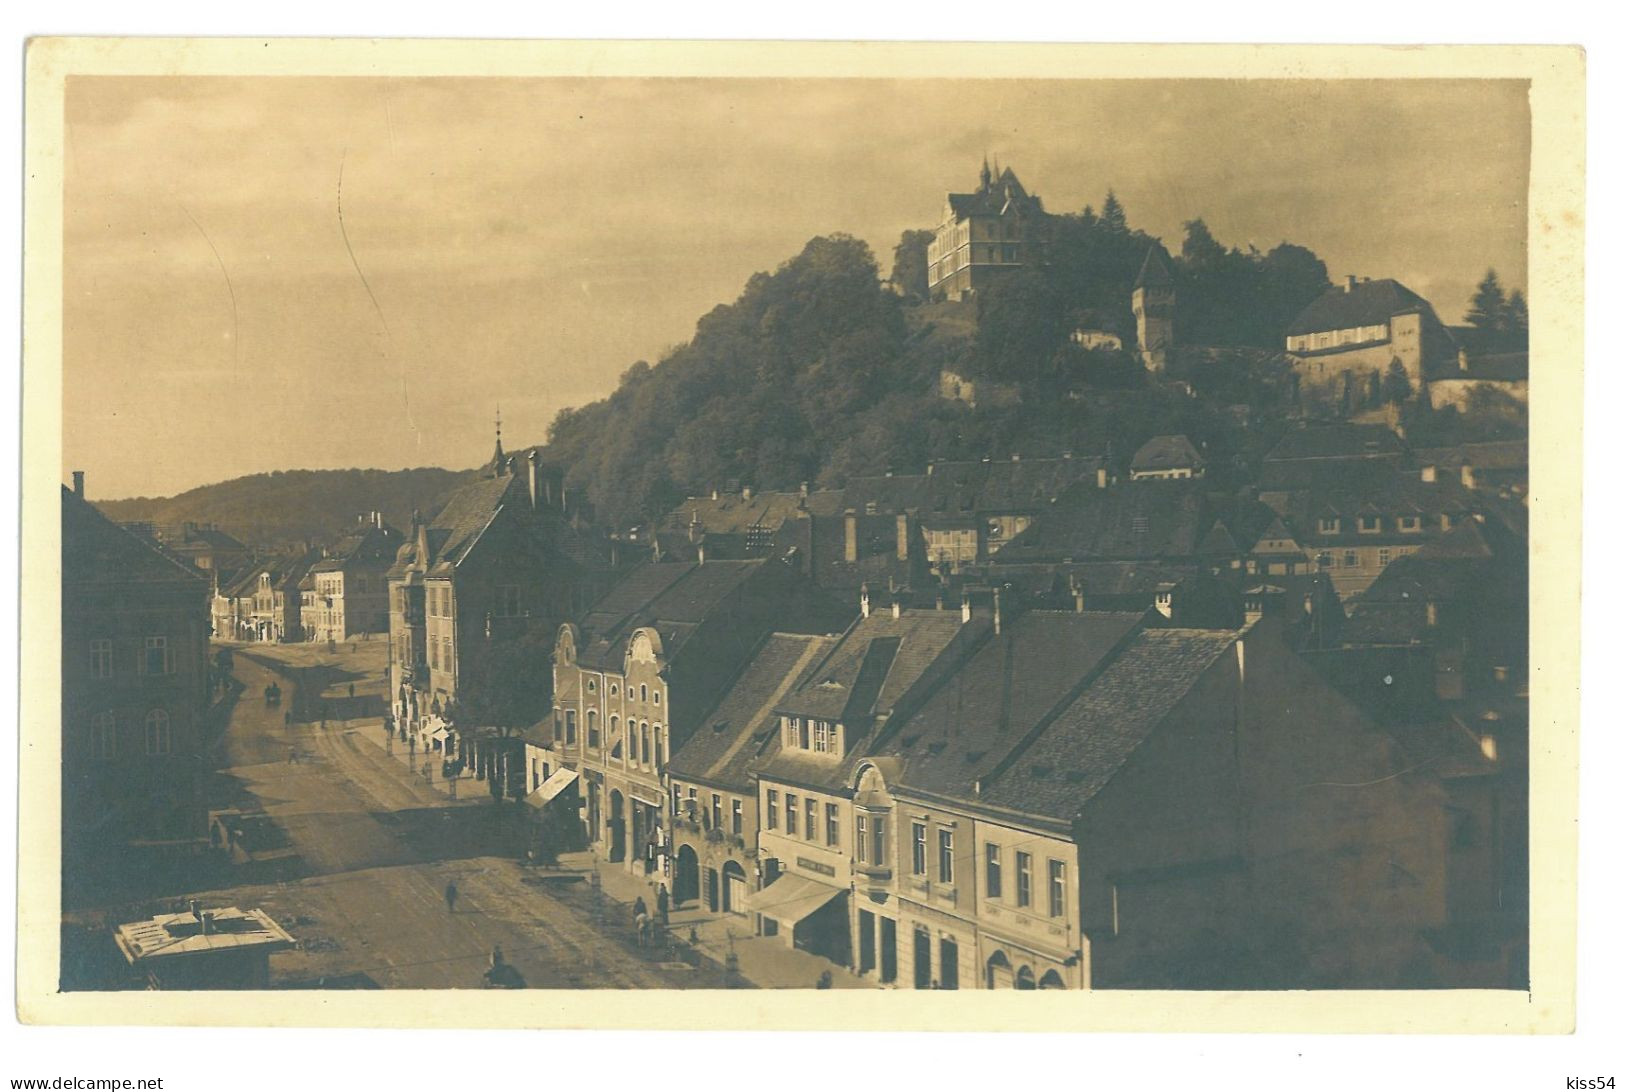 RO - 25188 SIGHISOARA, Mures, Panorama, Romania - Old Postcard, Real Photo - Unused - 1931 - Roumanie